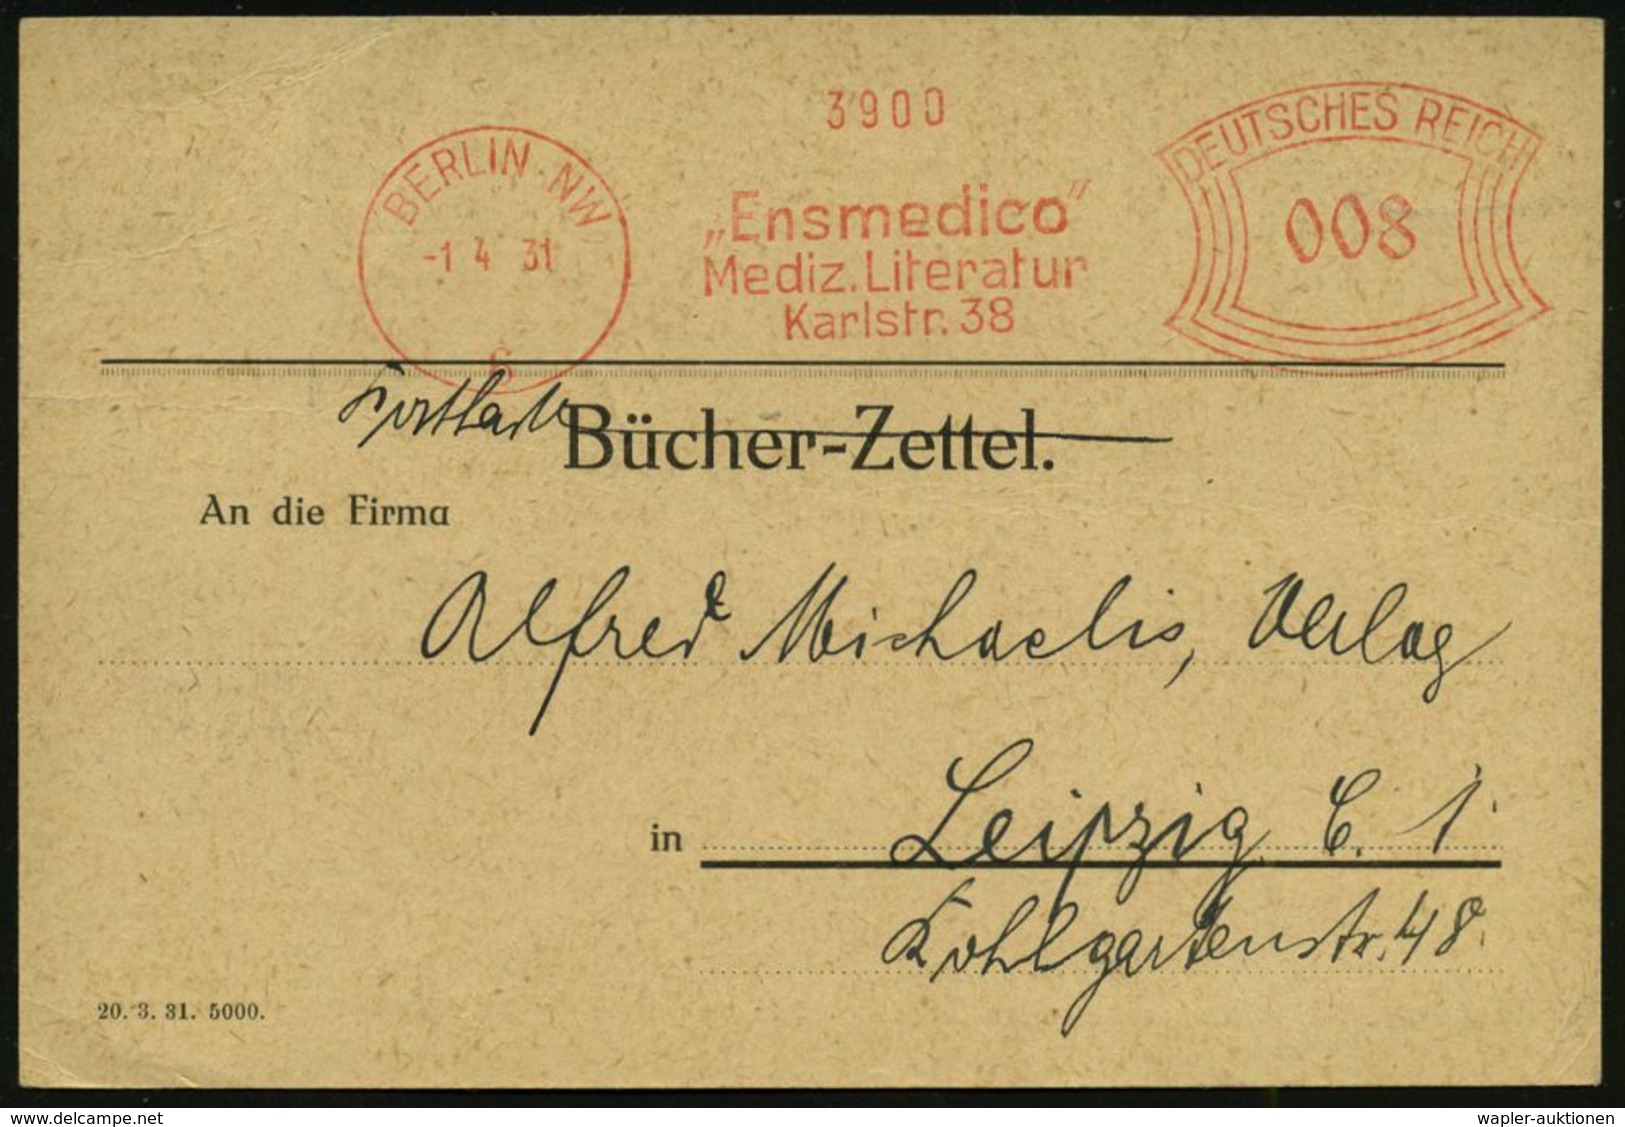 MEDIZIN / GESUNDHEITSWESEN : BERLIN NW/ 6/ "Ensmedico"/ Medizin.Literatur.. 1931 (1.4.) AFS 008 Pf. "Bücherzettel" Als P - Medizin